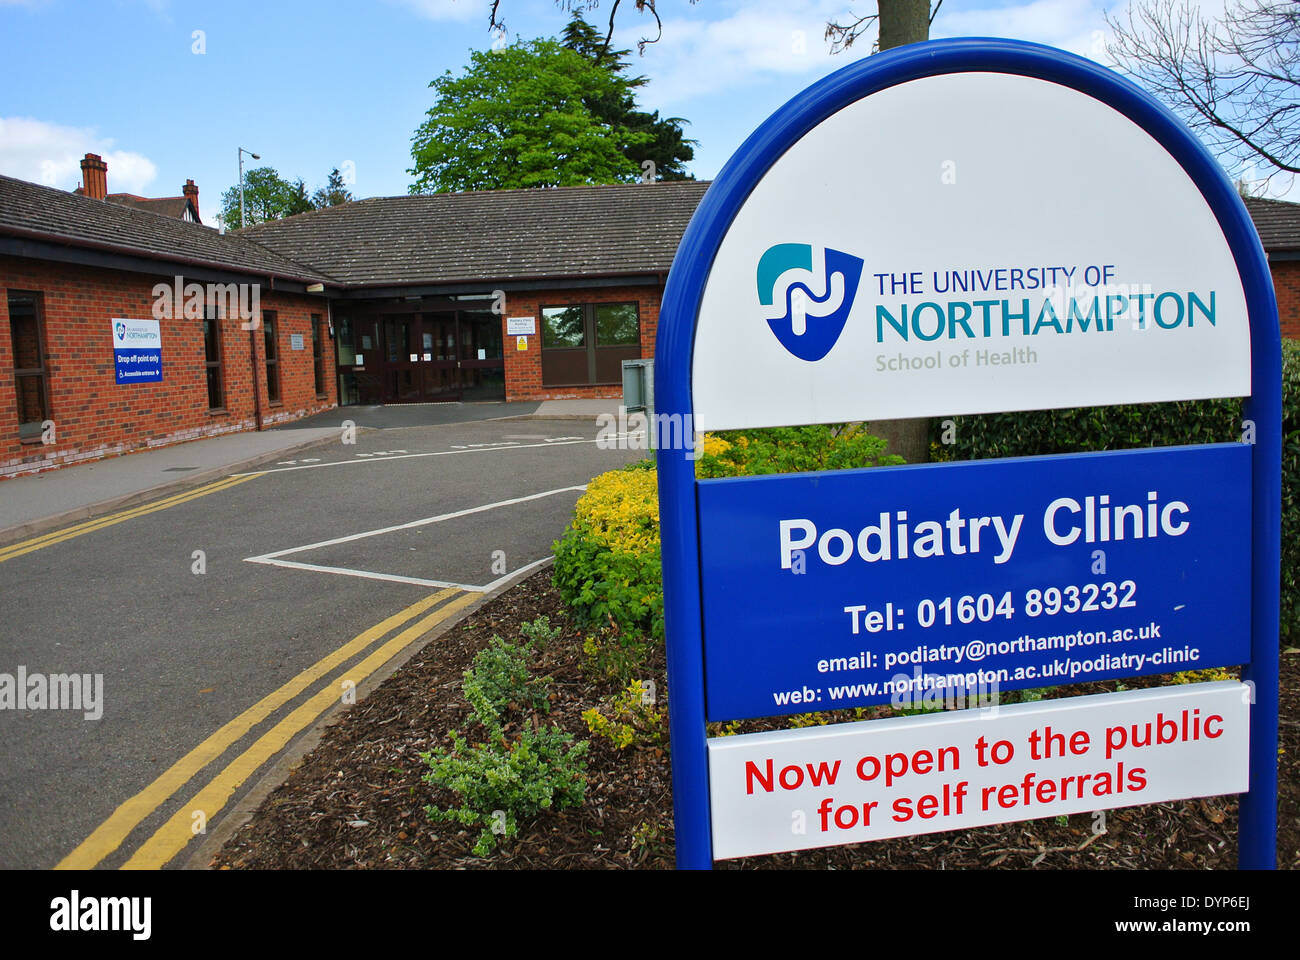 Podiatry Clinic sign at The University of Northampton Stock Photo